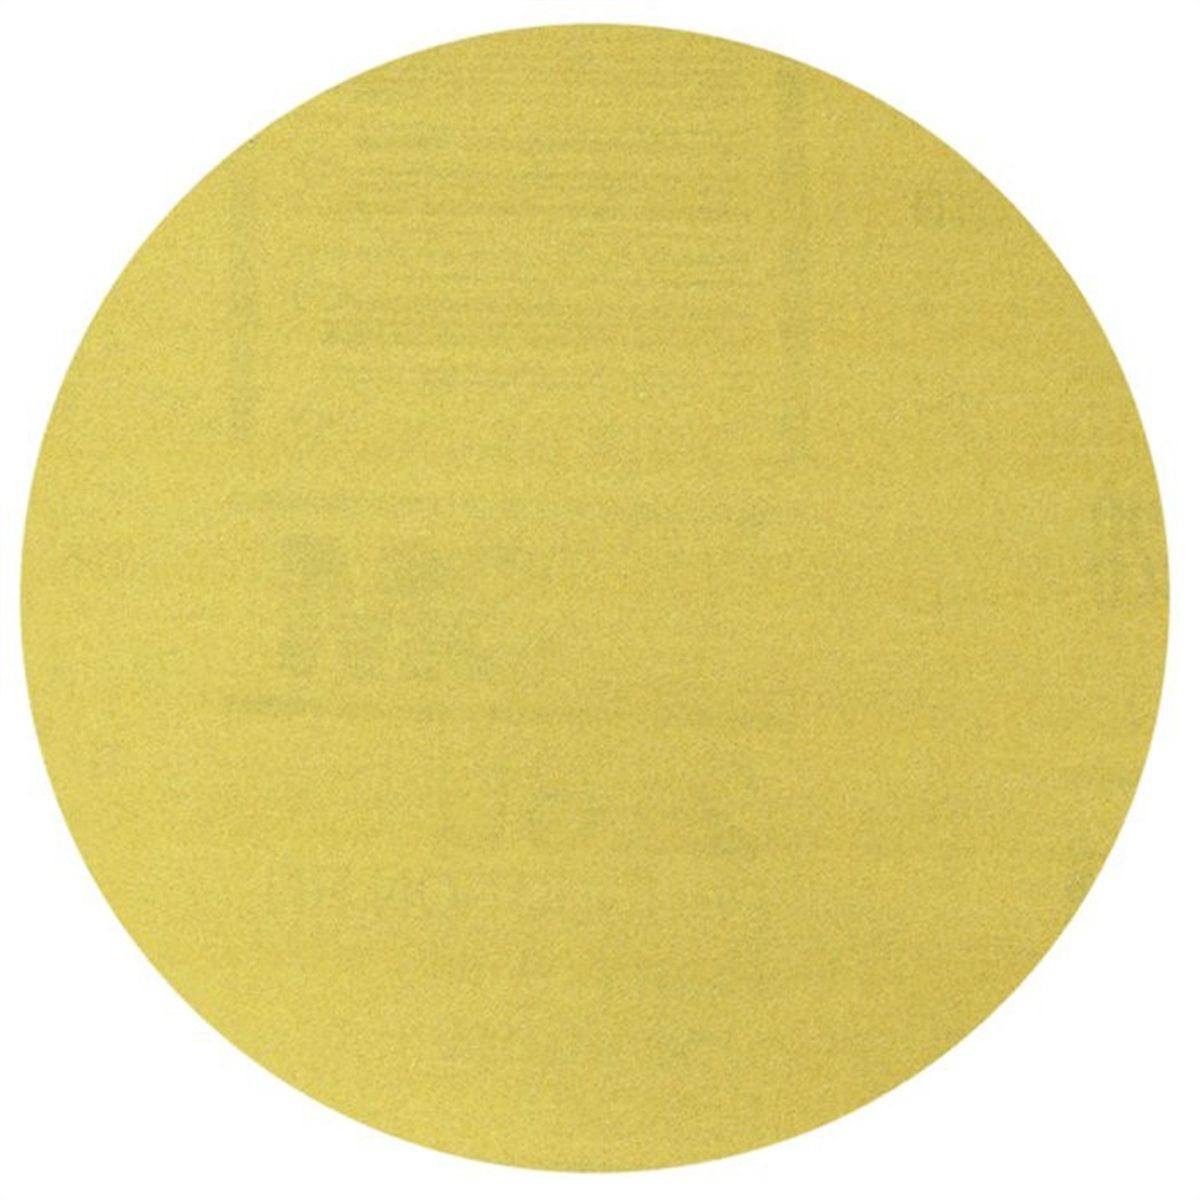 StikitT Gold Disc Roll - 80 Grade - 6 In